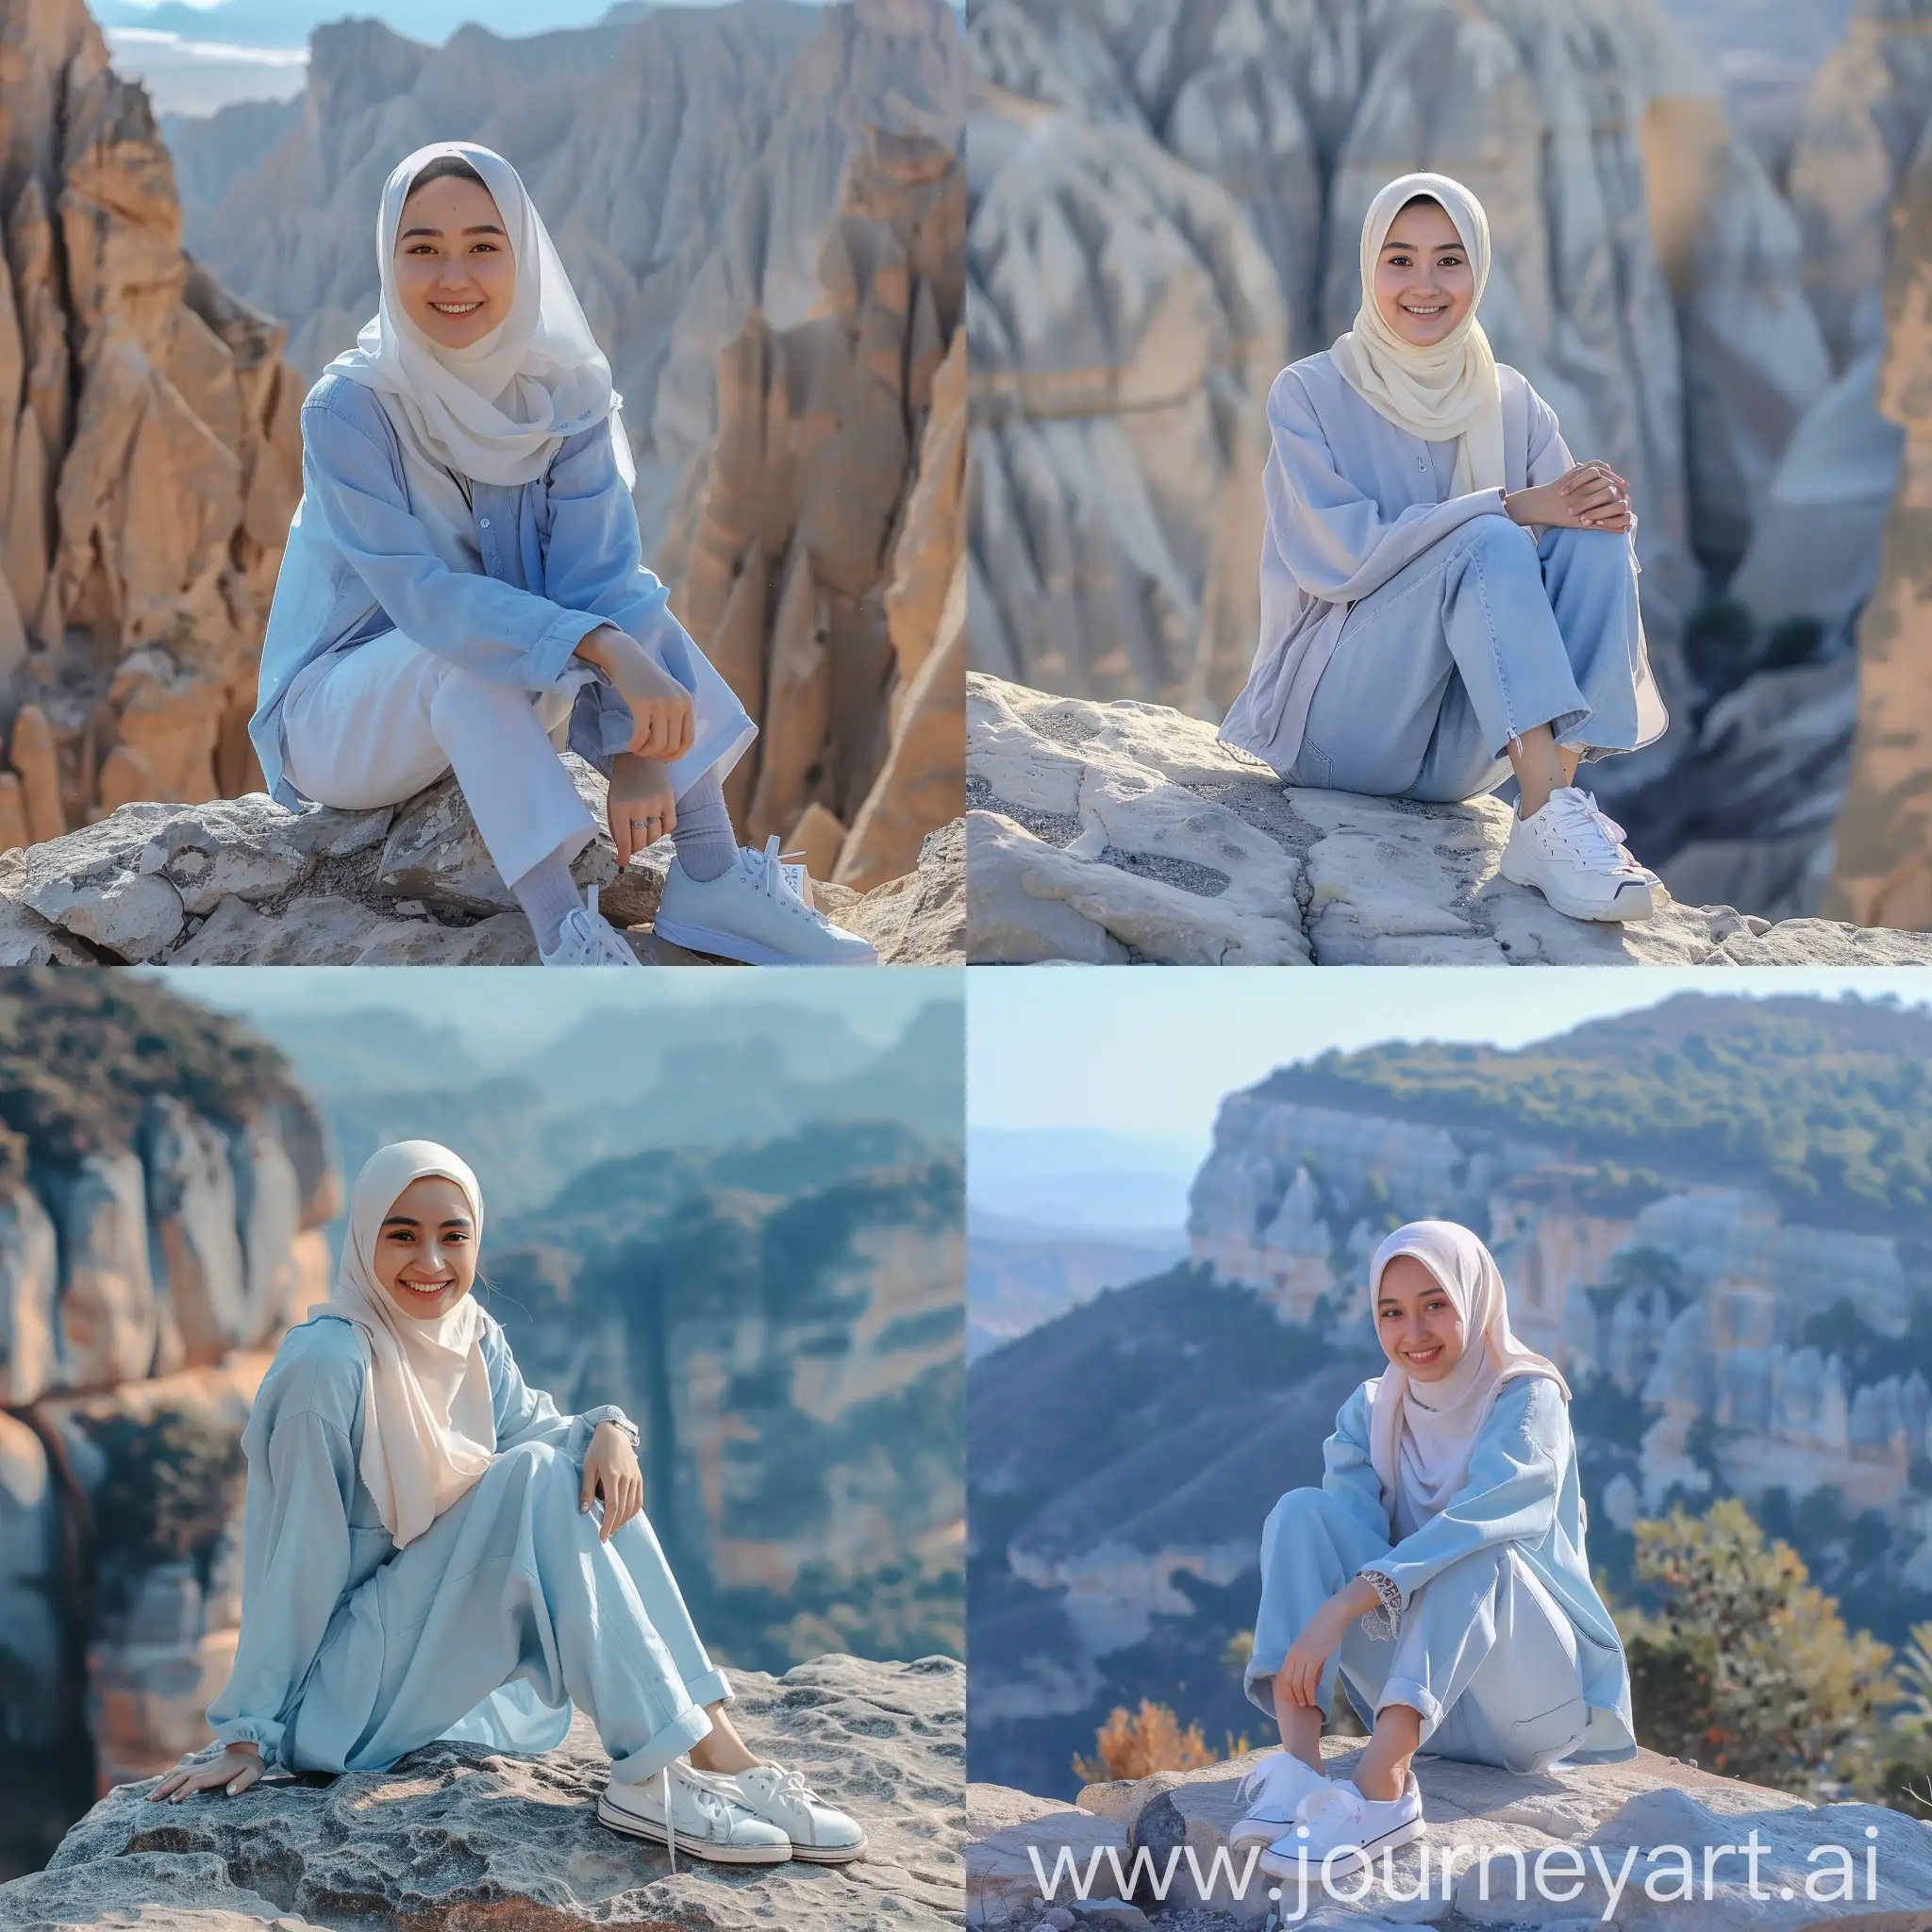 Seorang gadis remaja asia 20tahun mengenakan hijab putih pakaian biru muda sepatu putih duduk diatas bebatuan latar belakang sebuah pemandangan gunung dan tebing ekpresi tersenyum